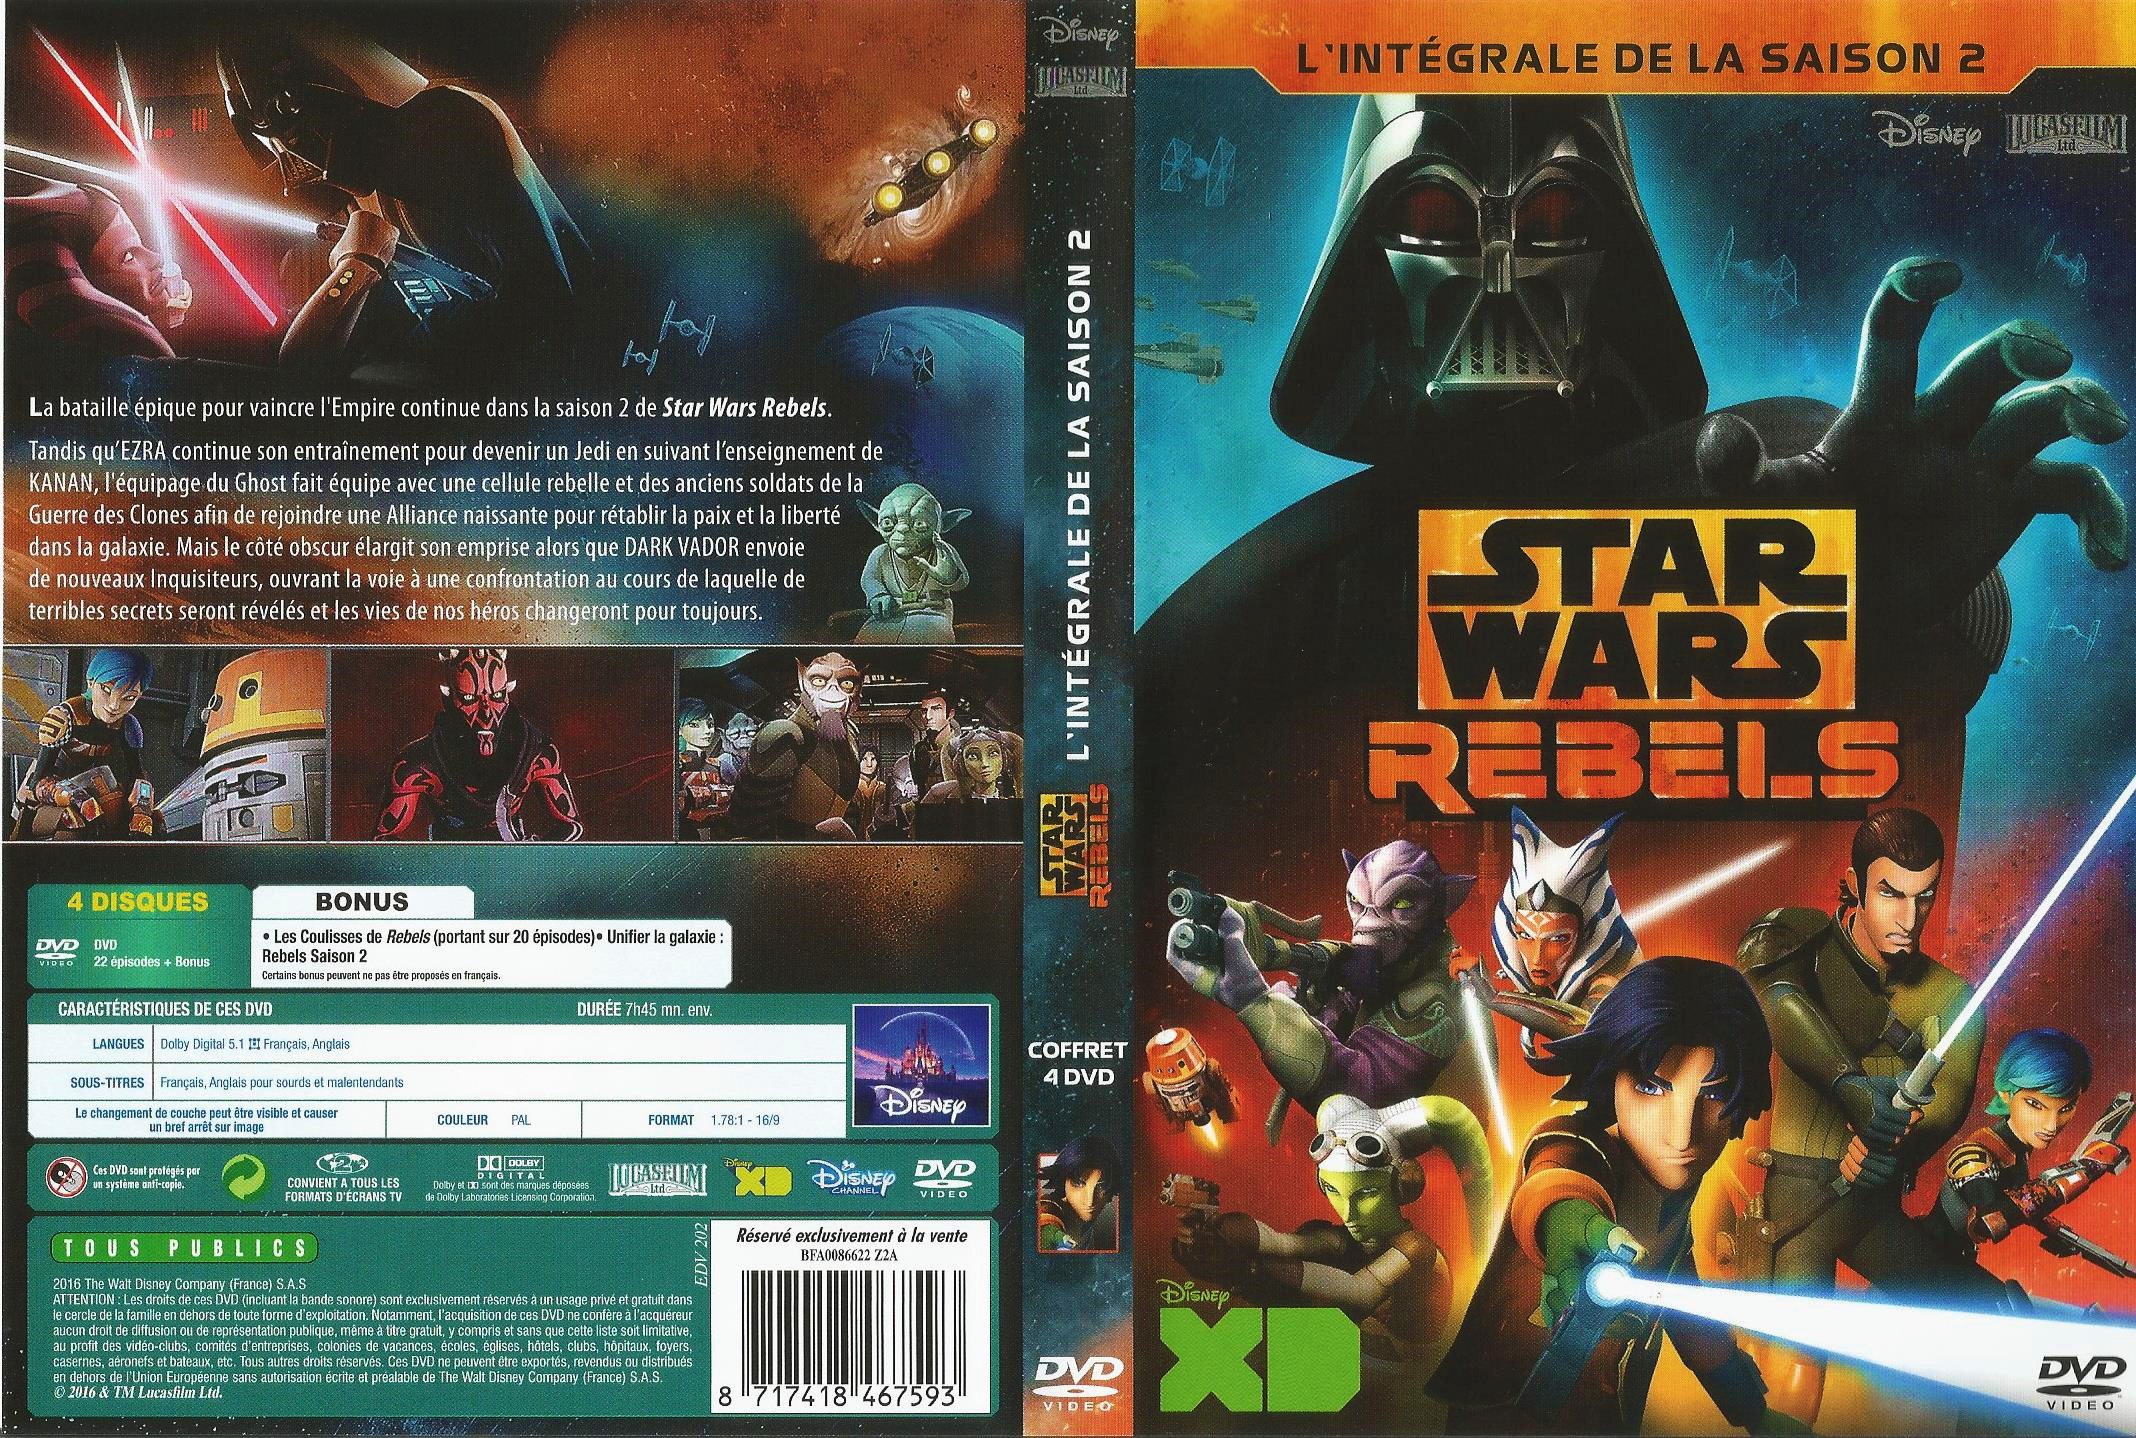 Jaquette DVD Star Wars Rebels saison 2